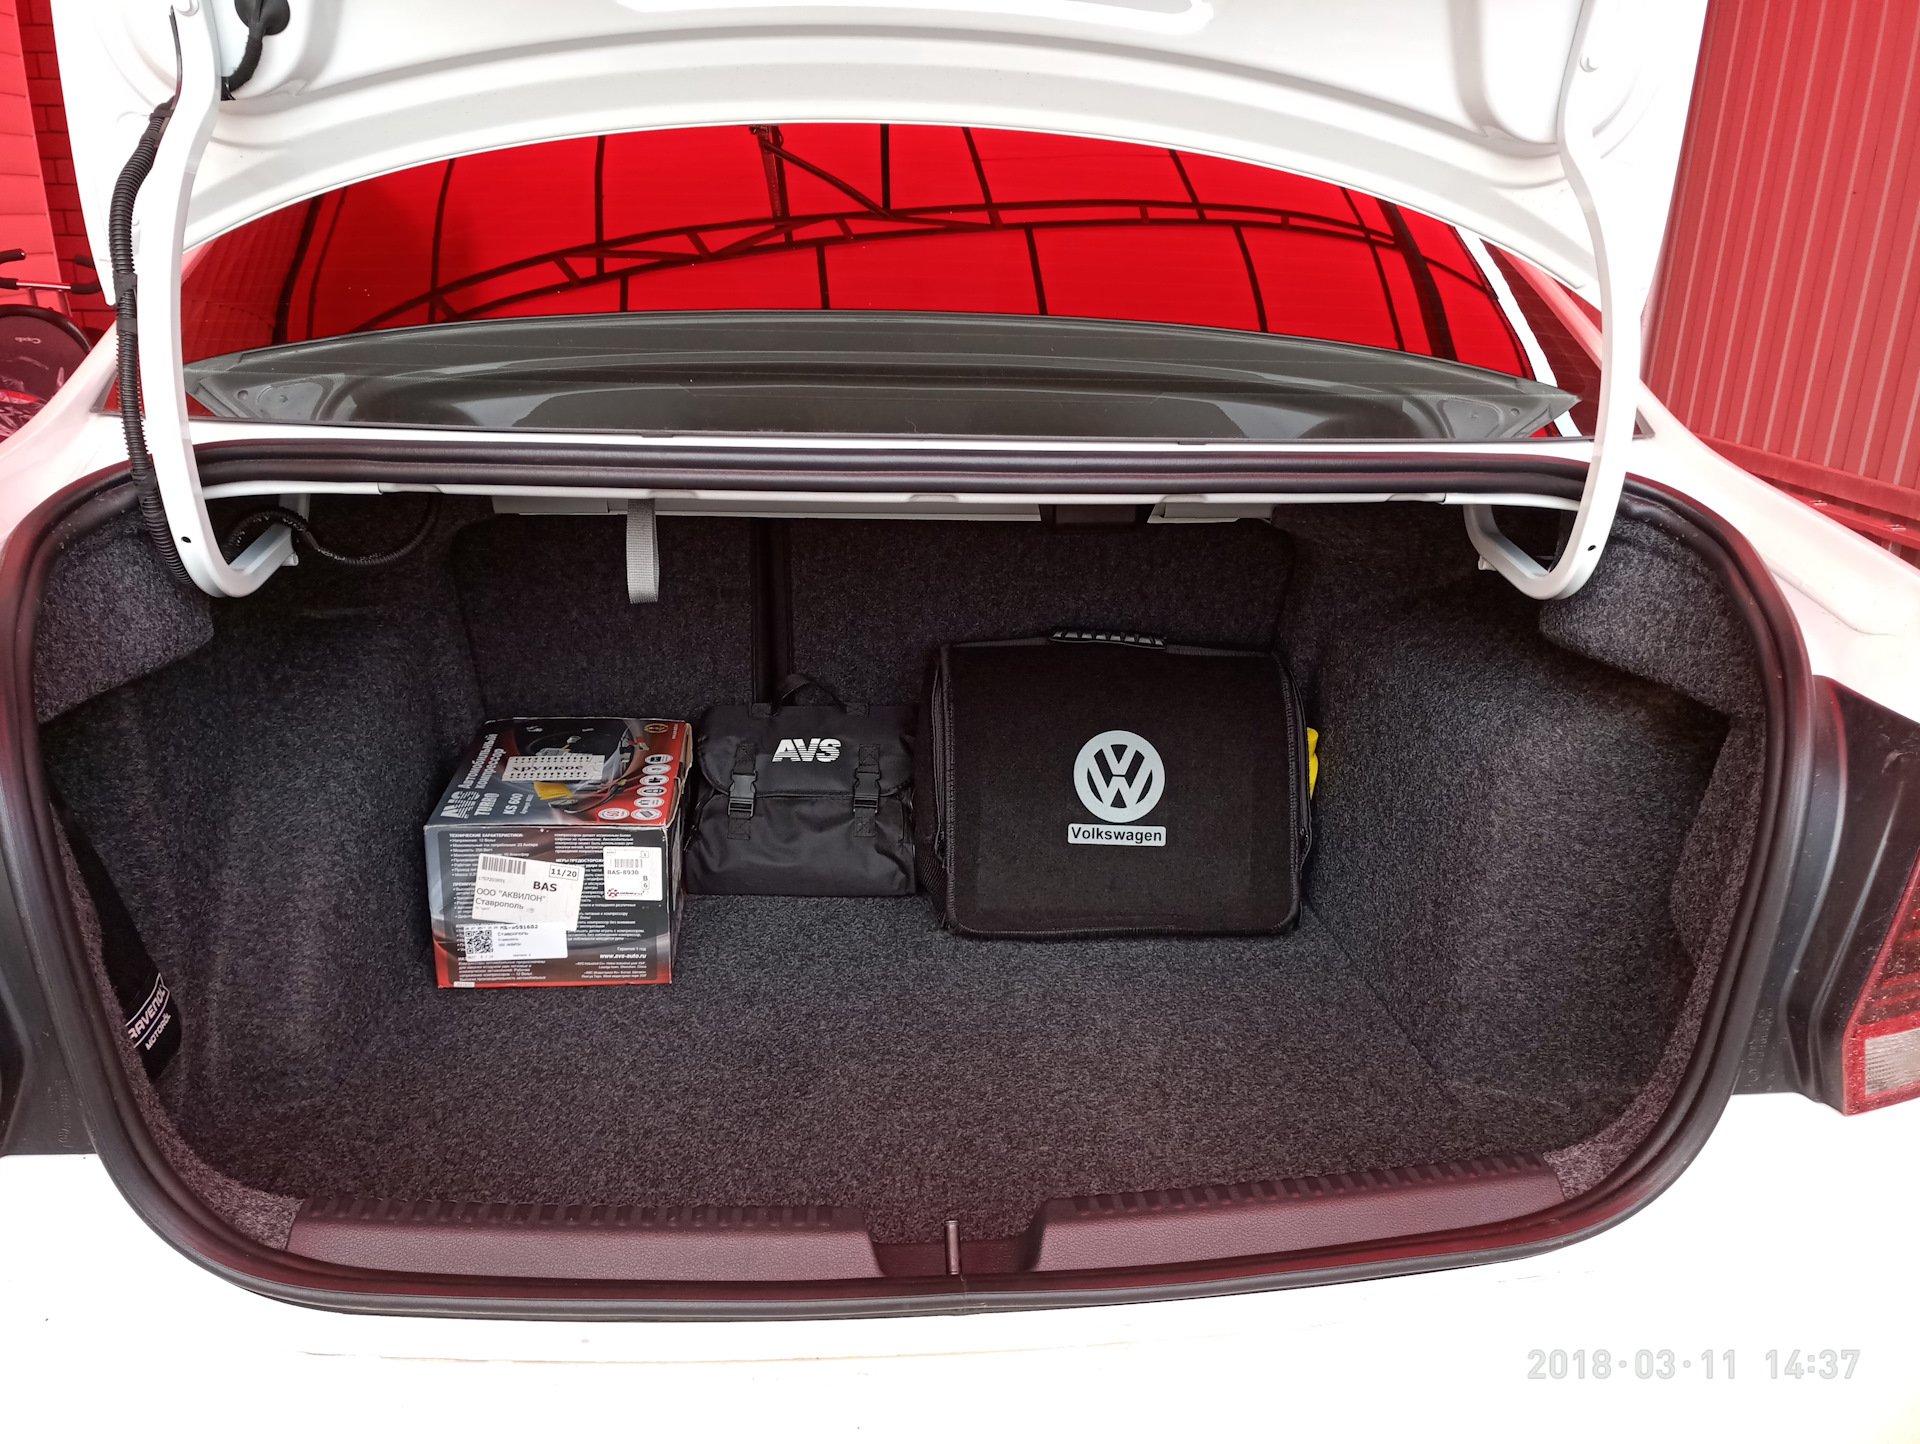 Купить багажник фольксваген поло седан. Volkswagen Polo sedan 2013 багажник. VW Polo sedan 2011 багажник. Фольксваген поло 5 багажник. Багажник Фольксваген поло седан 2013.